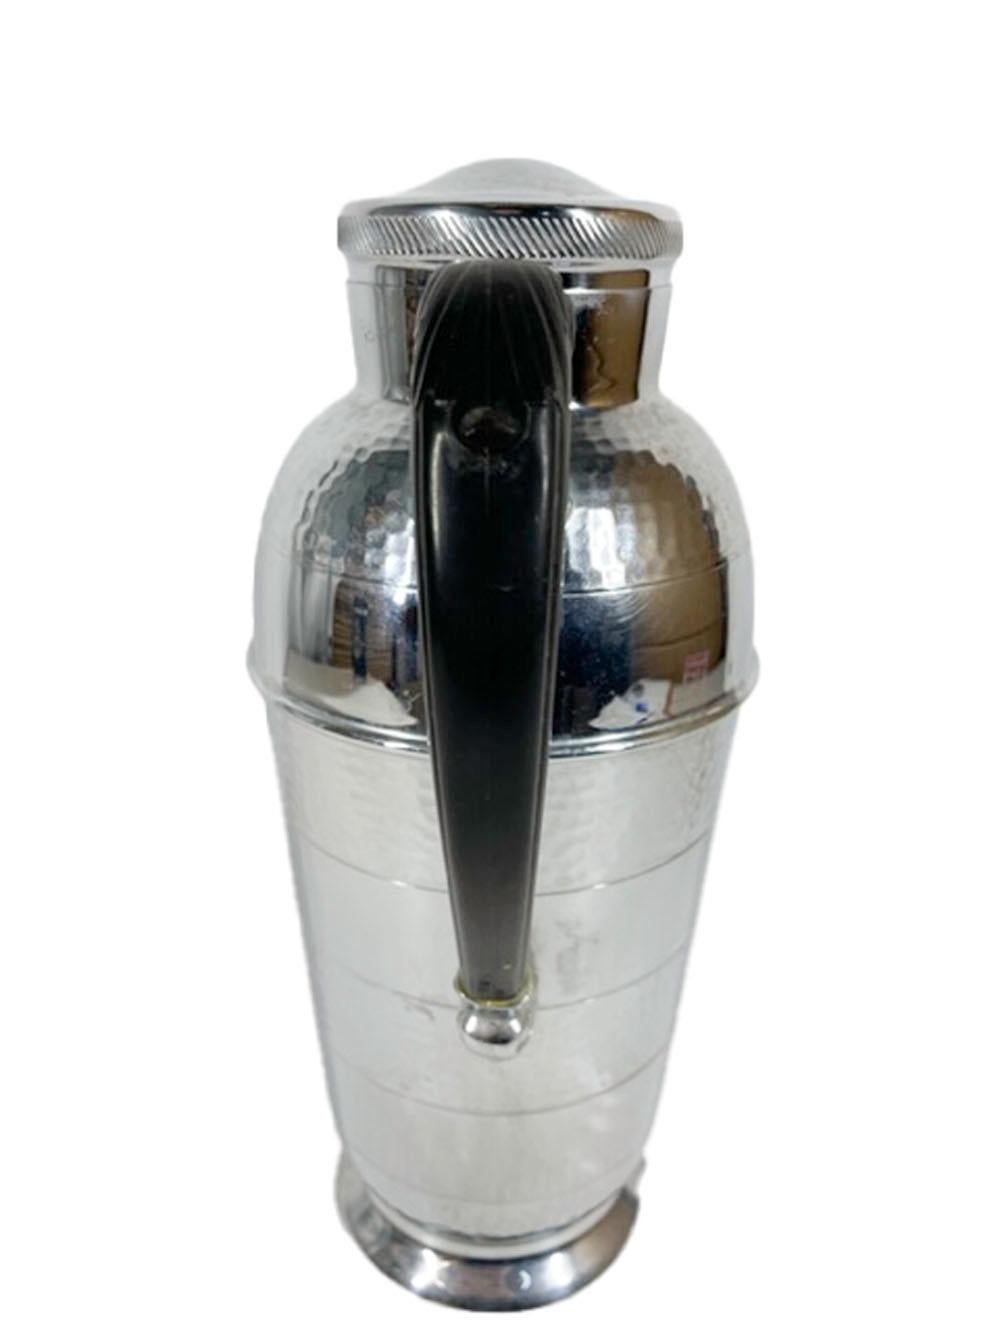 American Art Deco Krome-Kraft Cocktail Shaker by Farber Bros., Chrome with Bakelite